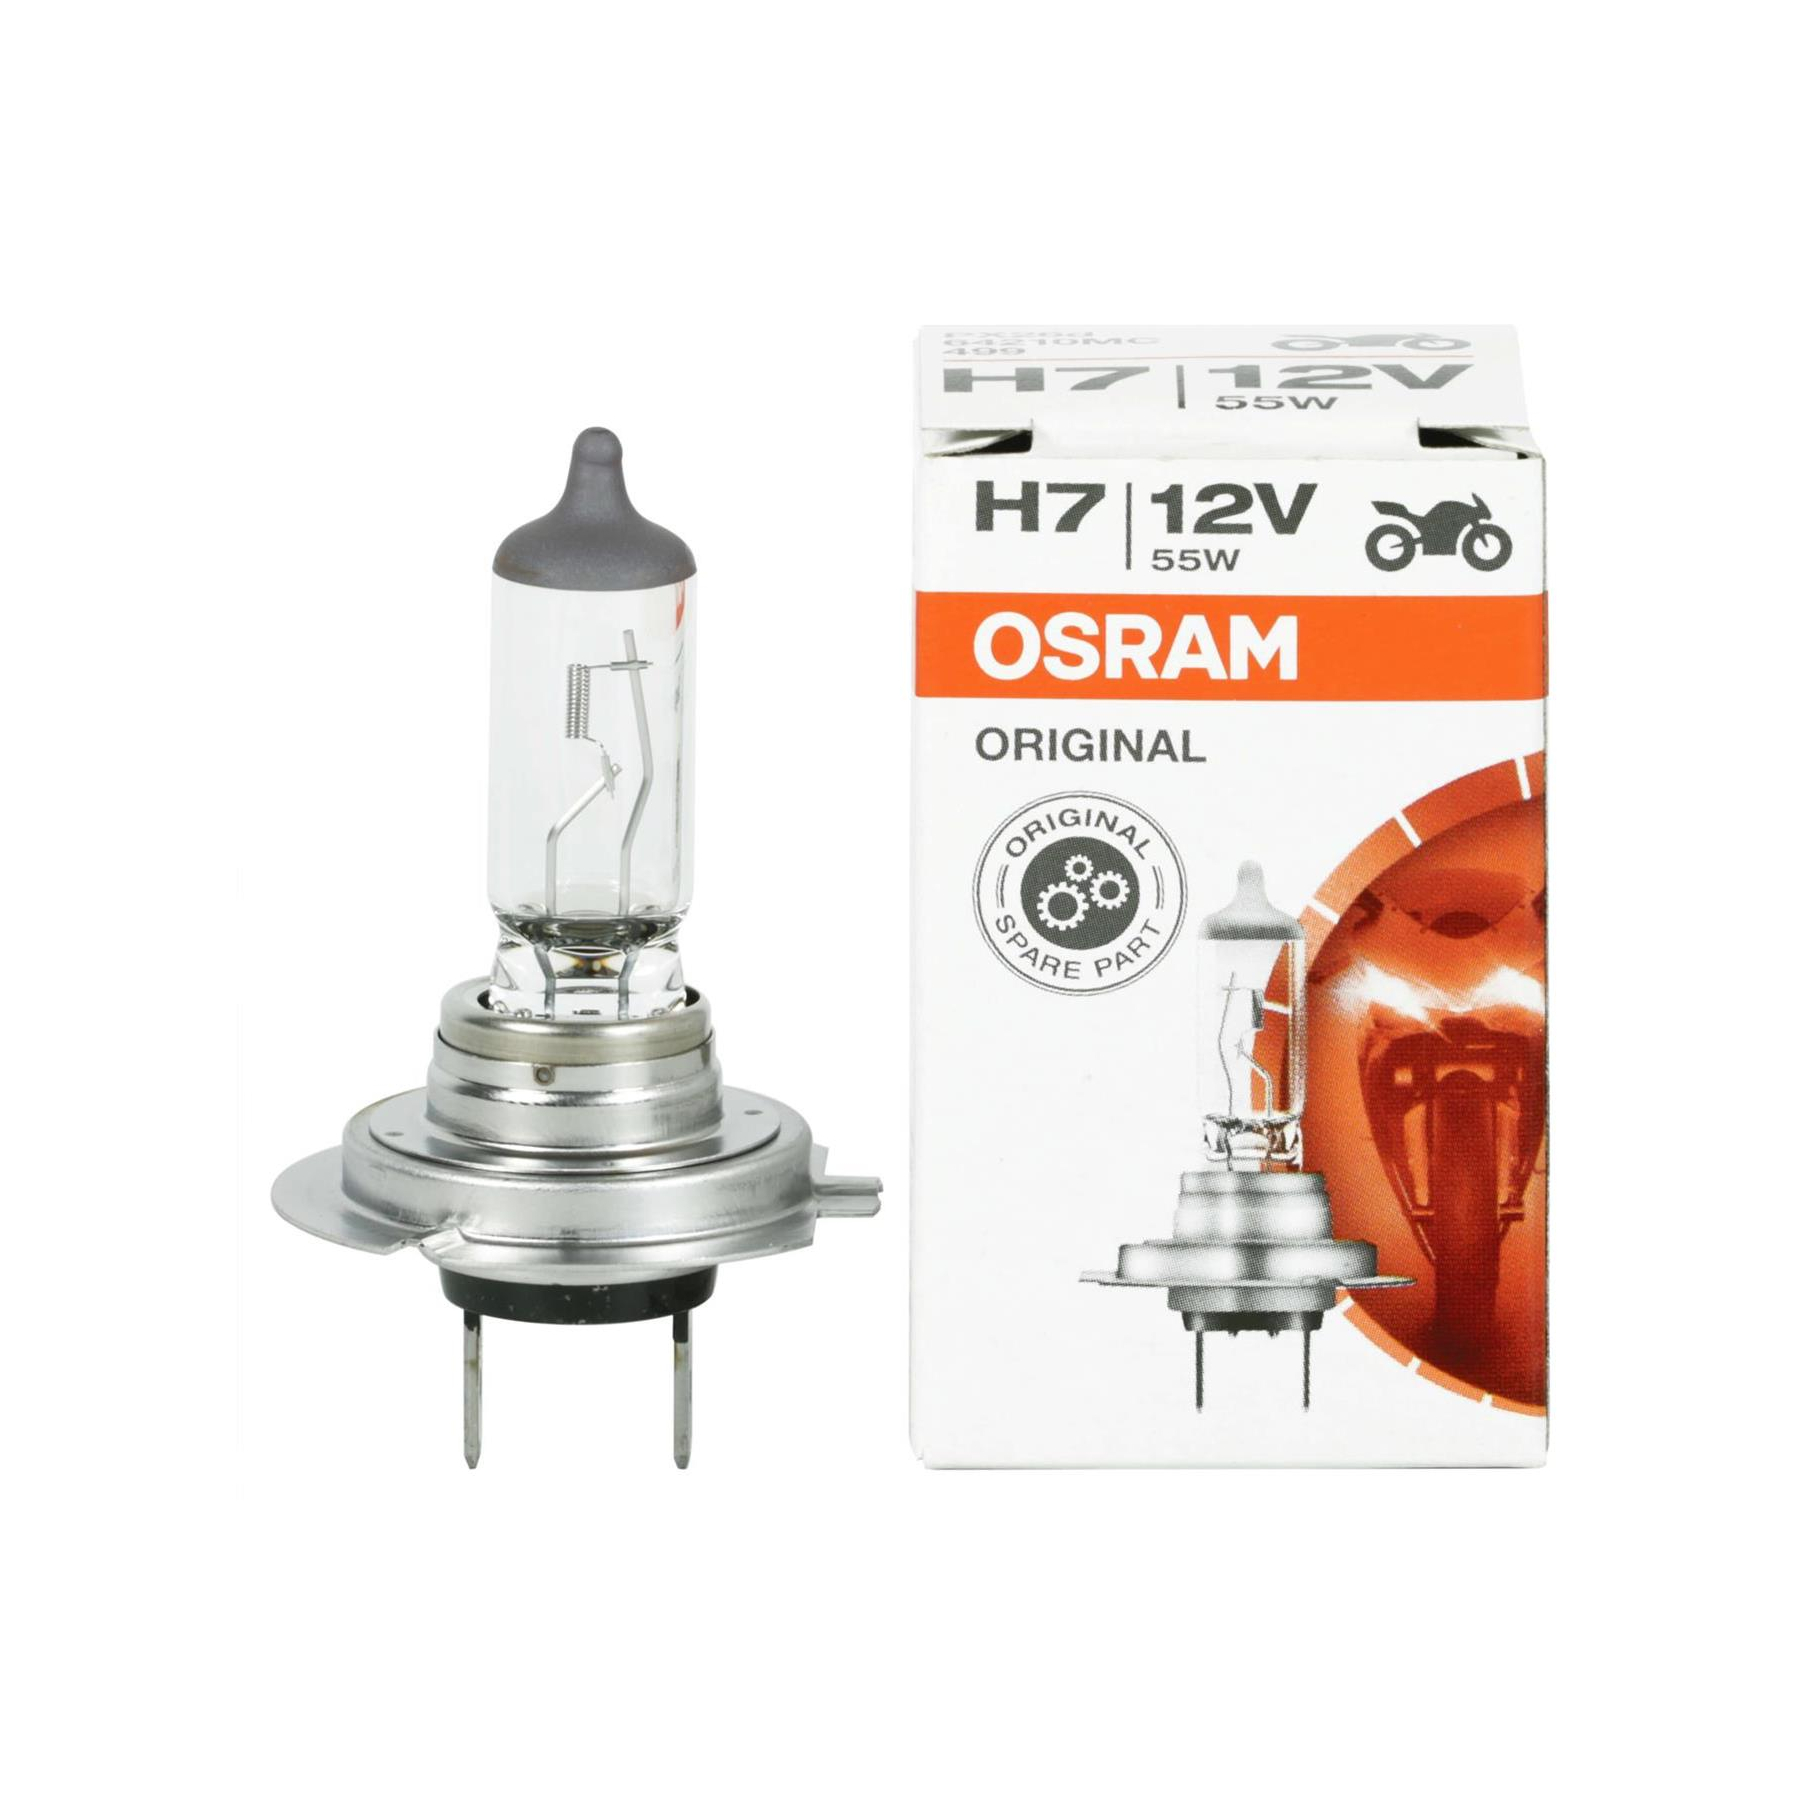 OSRAM Lampe Halogenlampe H4 ORIGINAL LINE 12V 60/55W (1 Stück